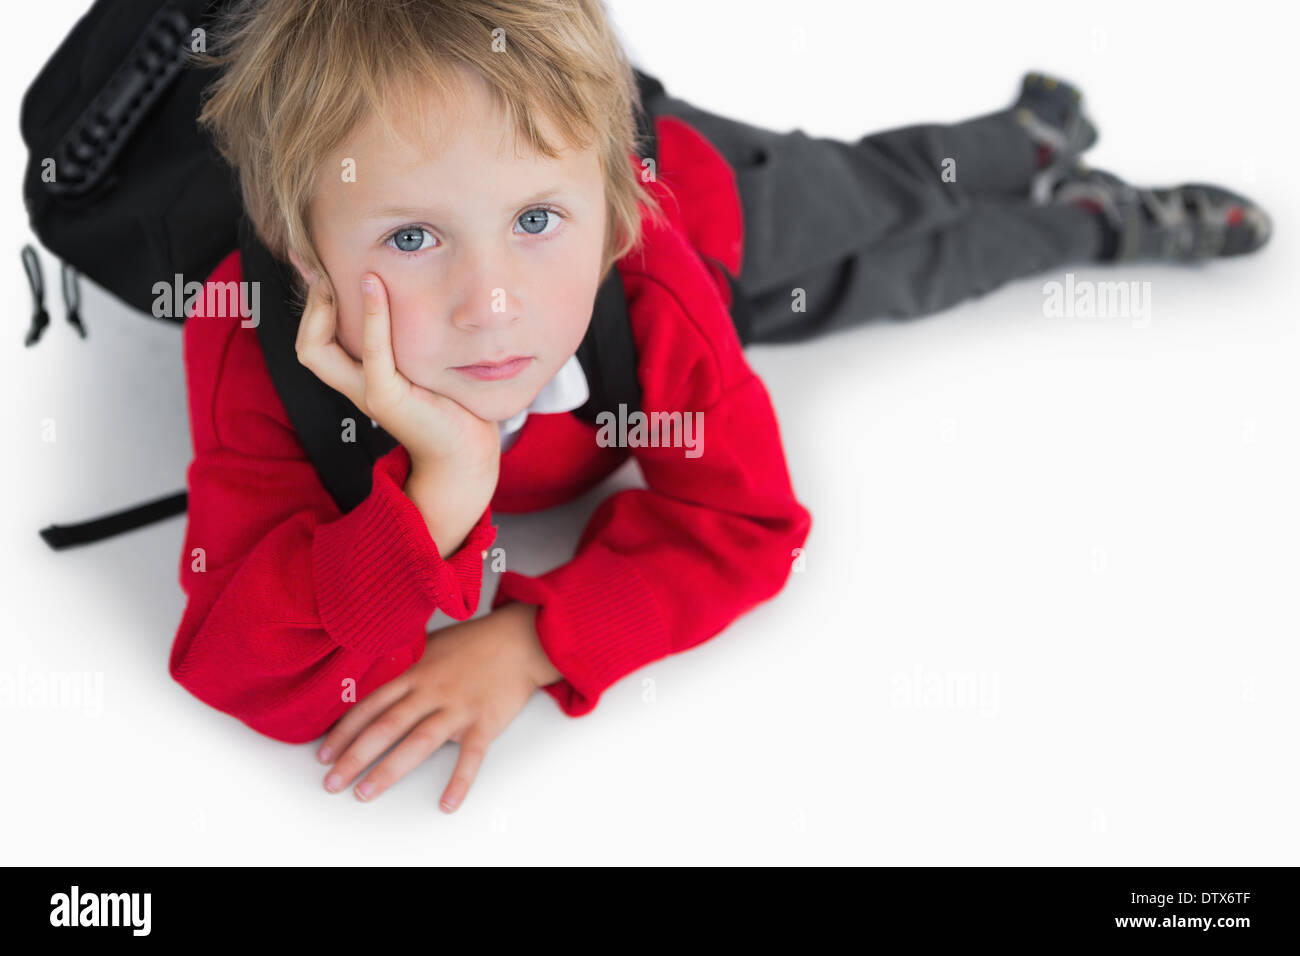 Boy lying on floor with schoolbag Stock Photo